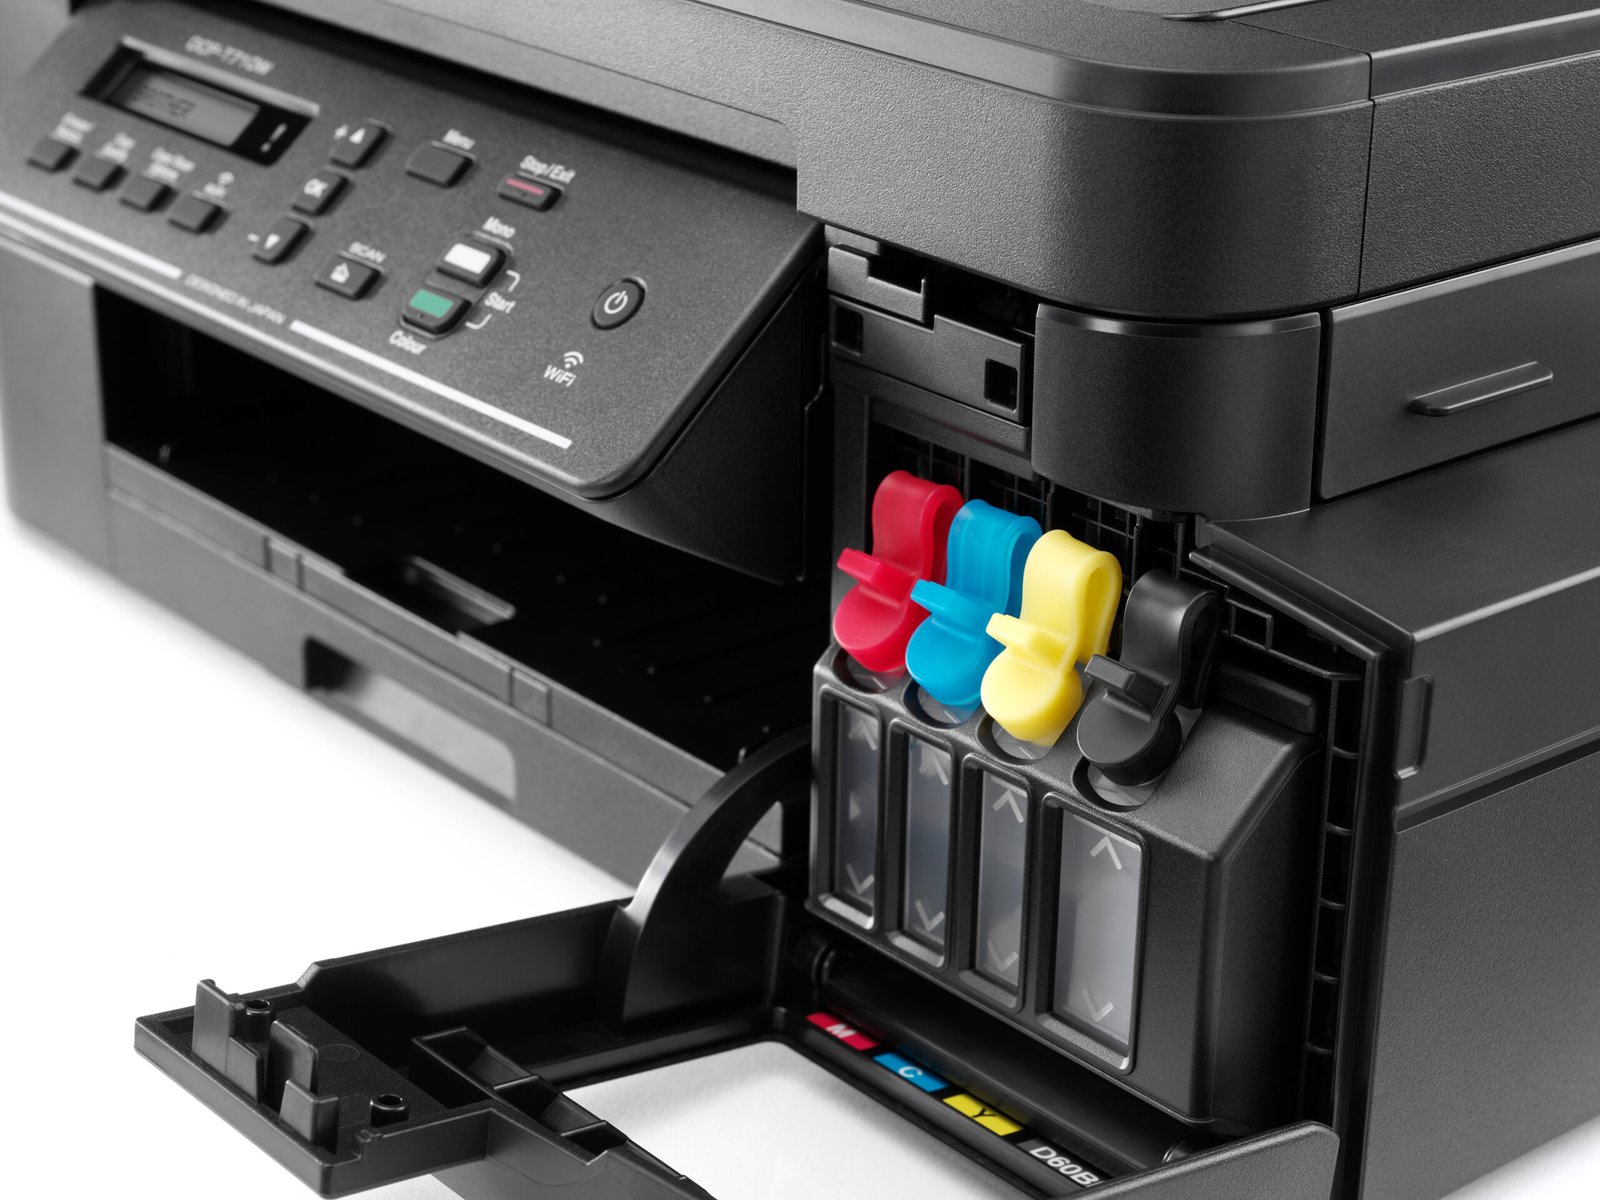 Impresora Multifuncional Brother Dcp-T710w